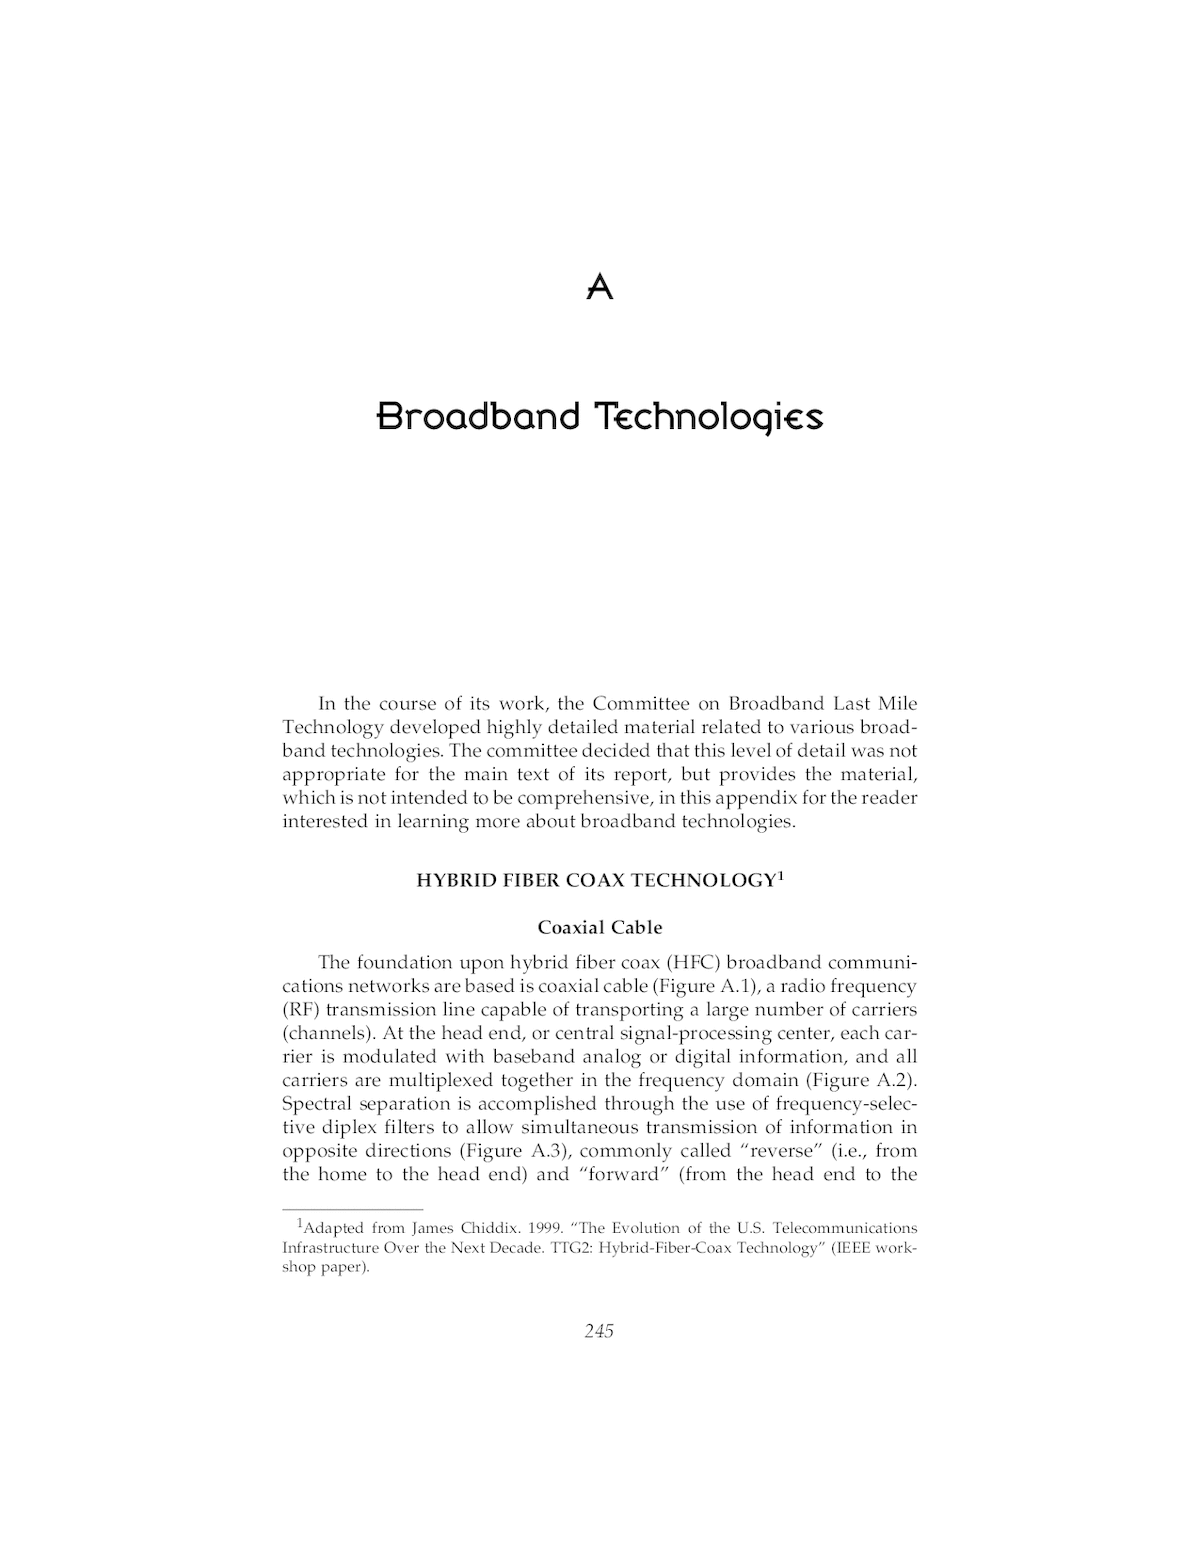 A Broadband Technologies, Broadband: Bringing Home the Bits